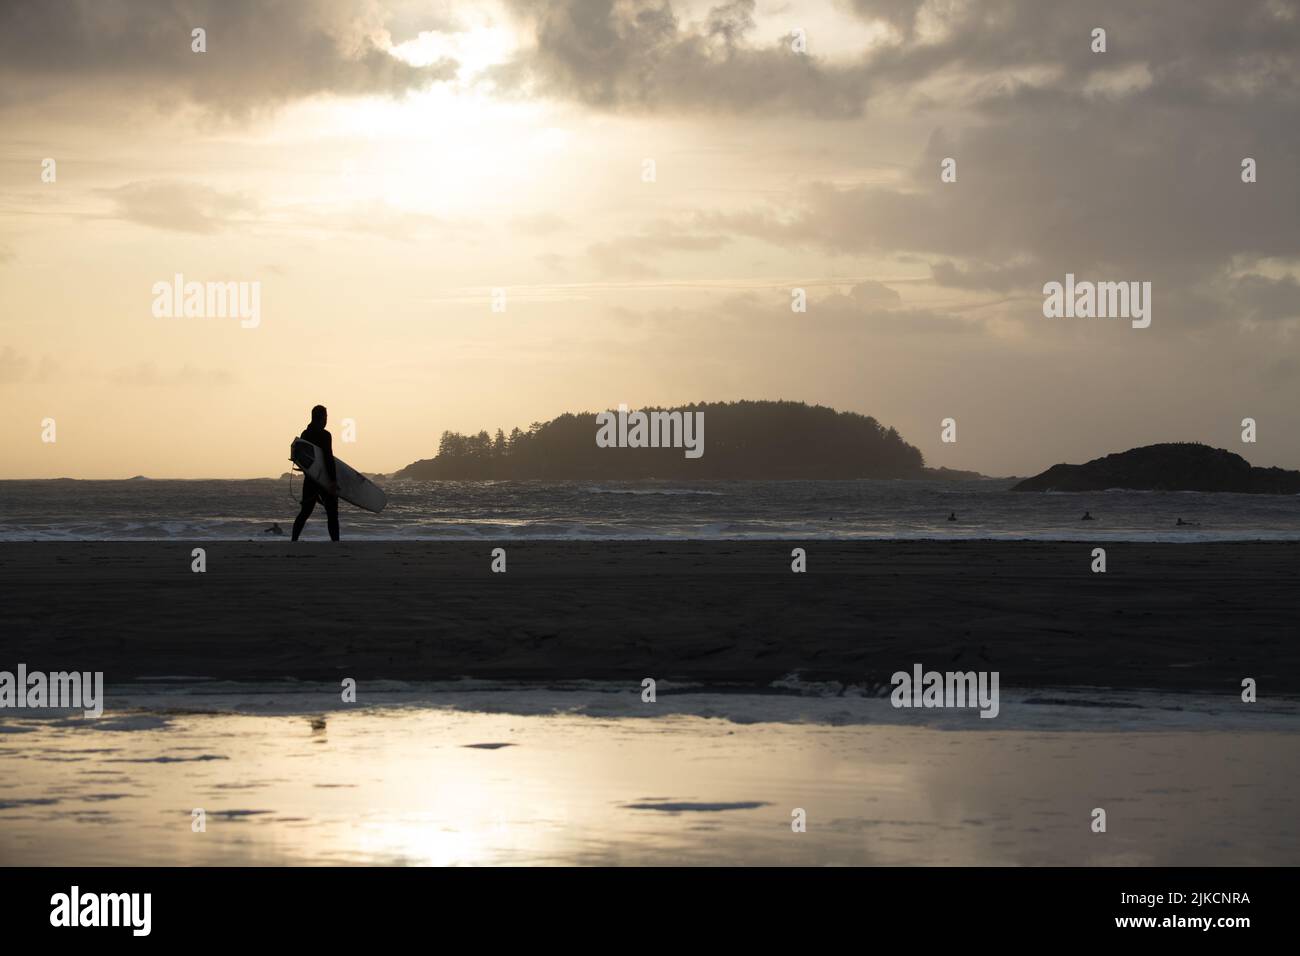 Surfer walking on the beach at sunset in Tofino, British Columbia Stock Photo